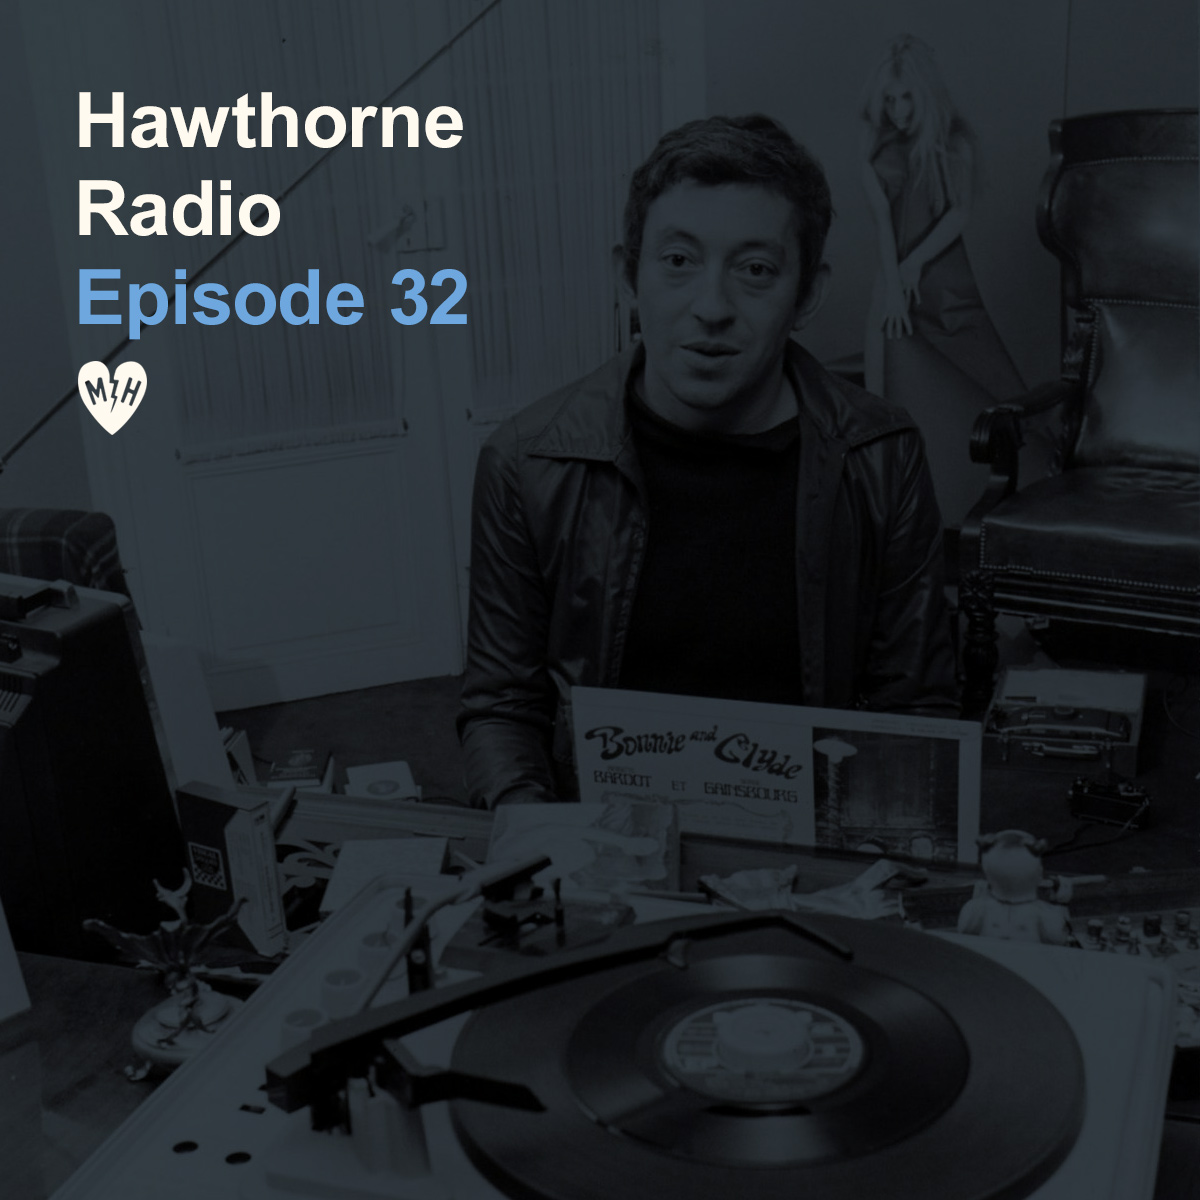 Hawthorne Radio Episode 32 Mayer Hawthorne Official Site 5243